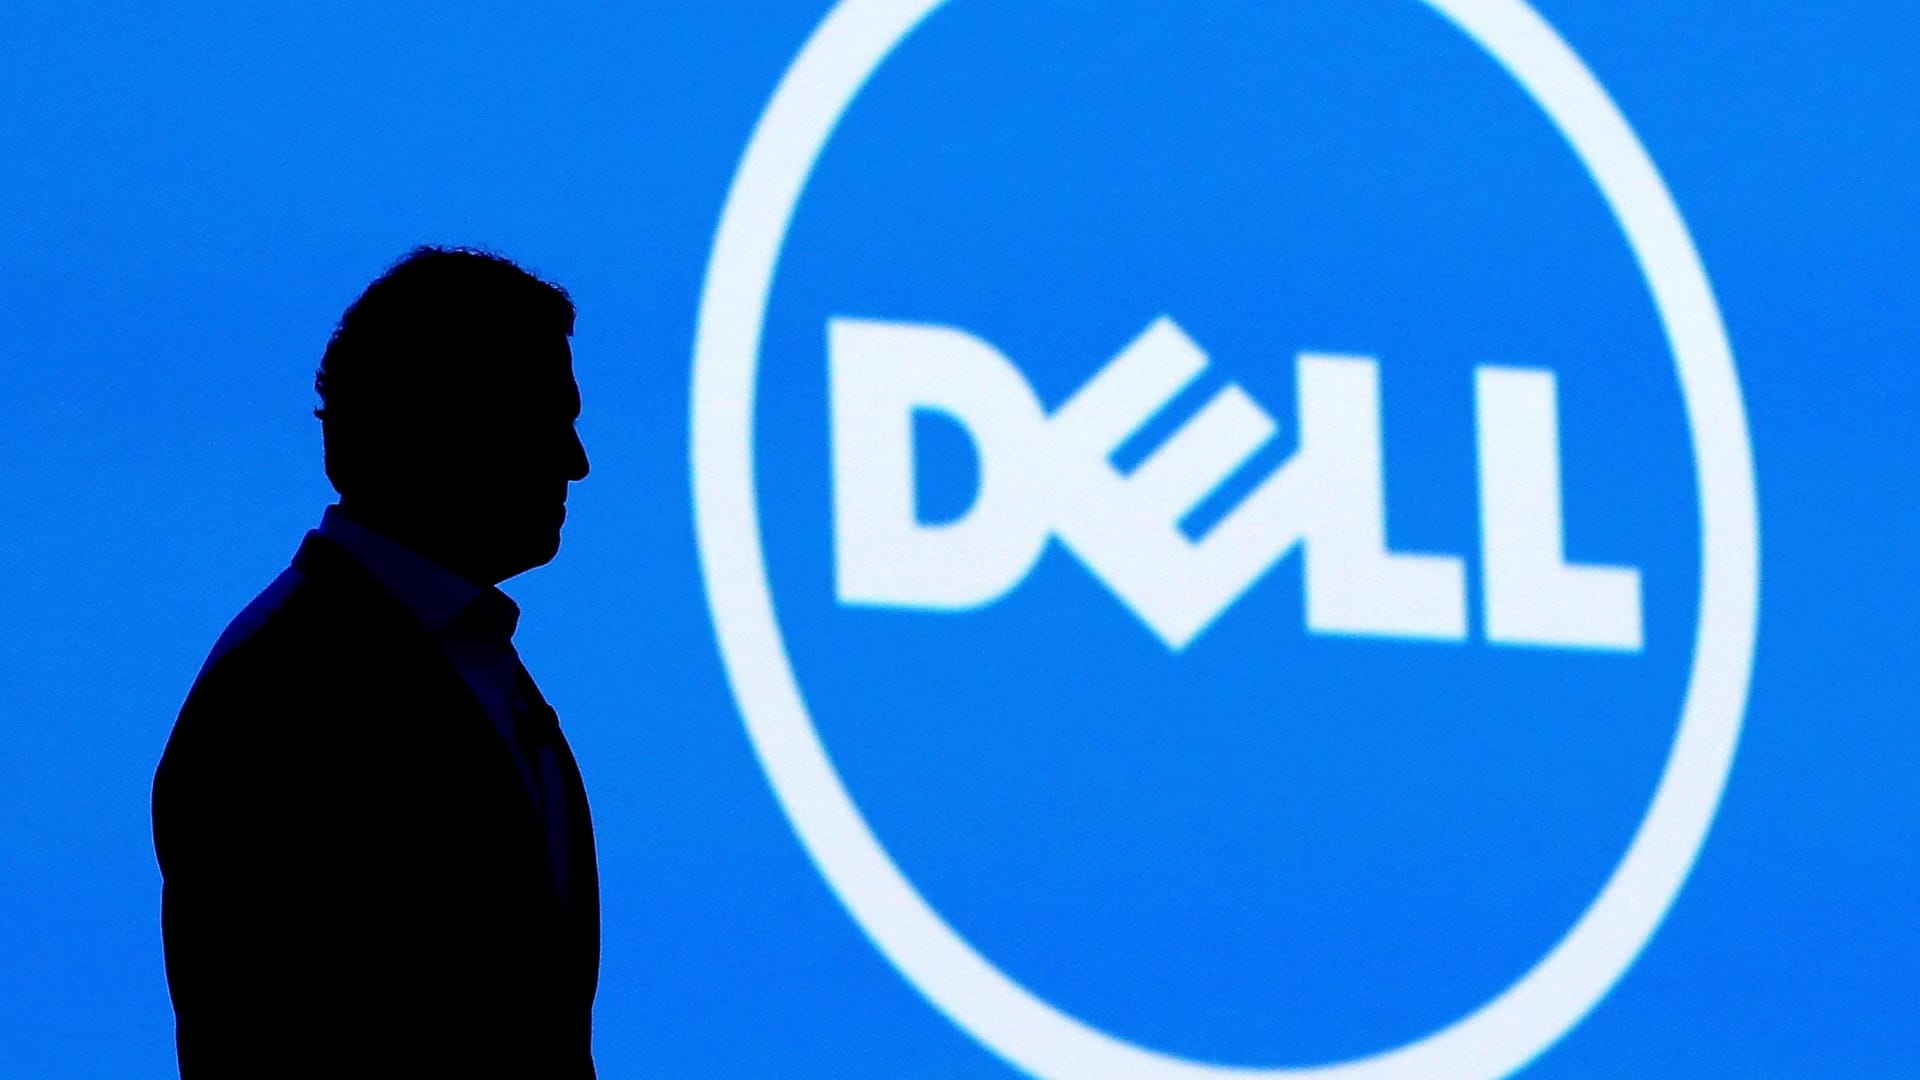 Goldman downgrades Dell as pressure on the PC market mounts thumbnail